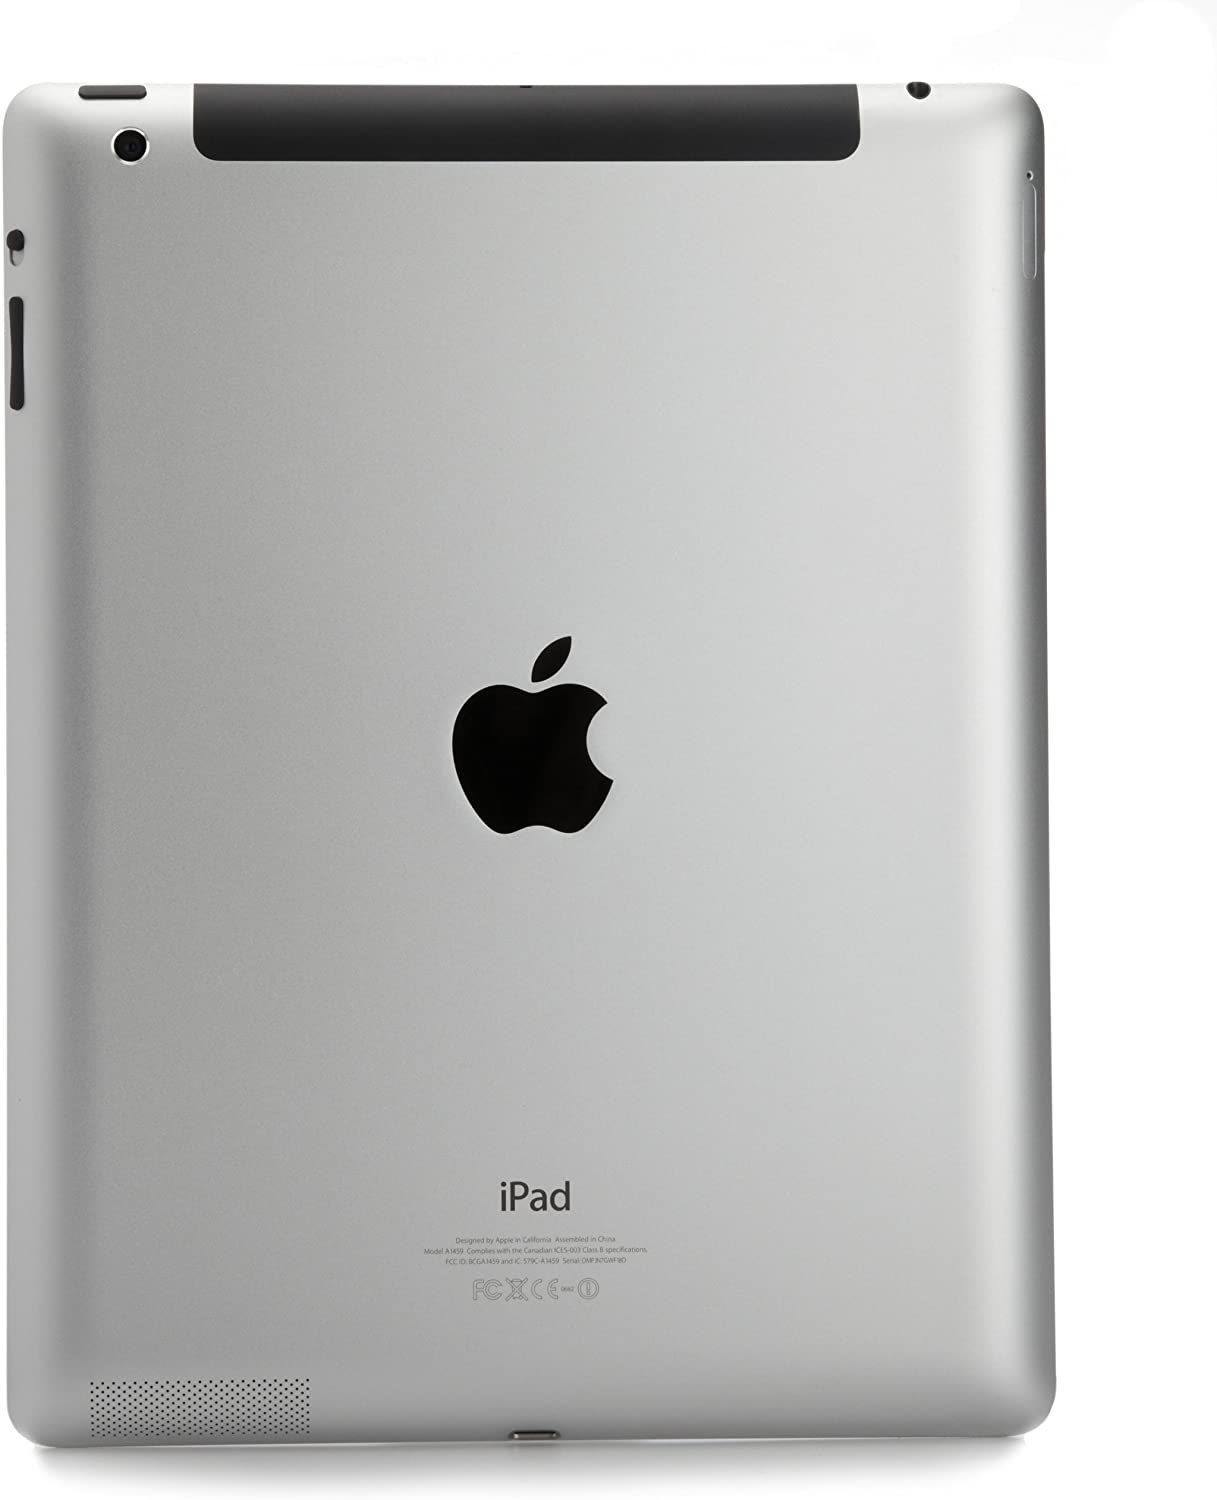 Refurbished Apple iPad with Retina Display MD527LL/A (64GB, Wi-Fi + Verizon, White) 4th Generation 